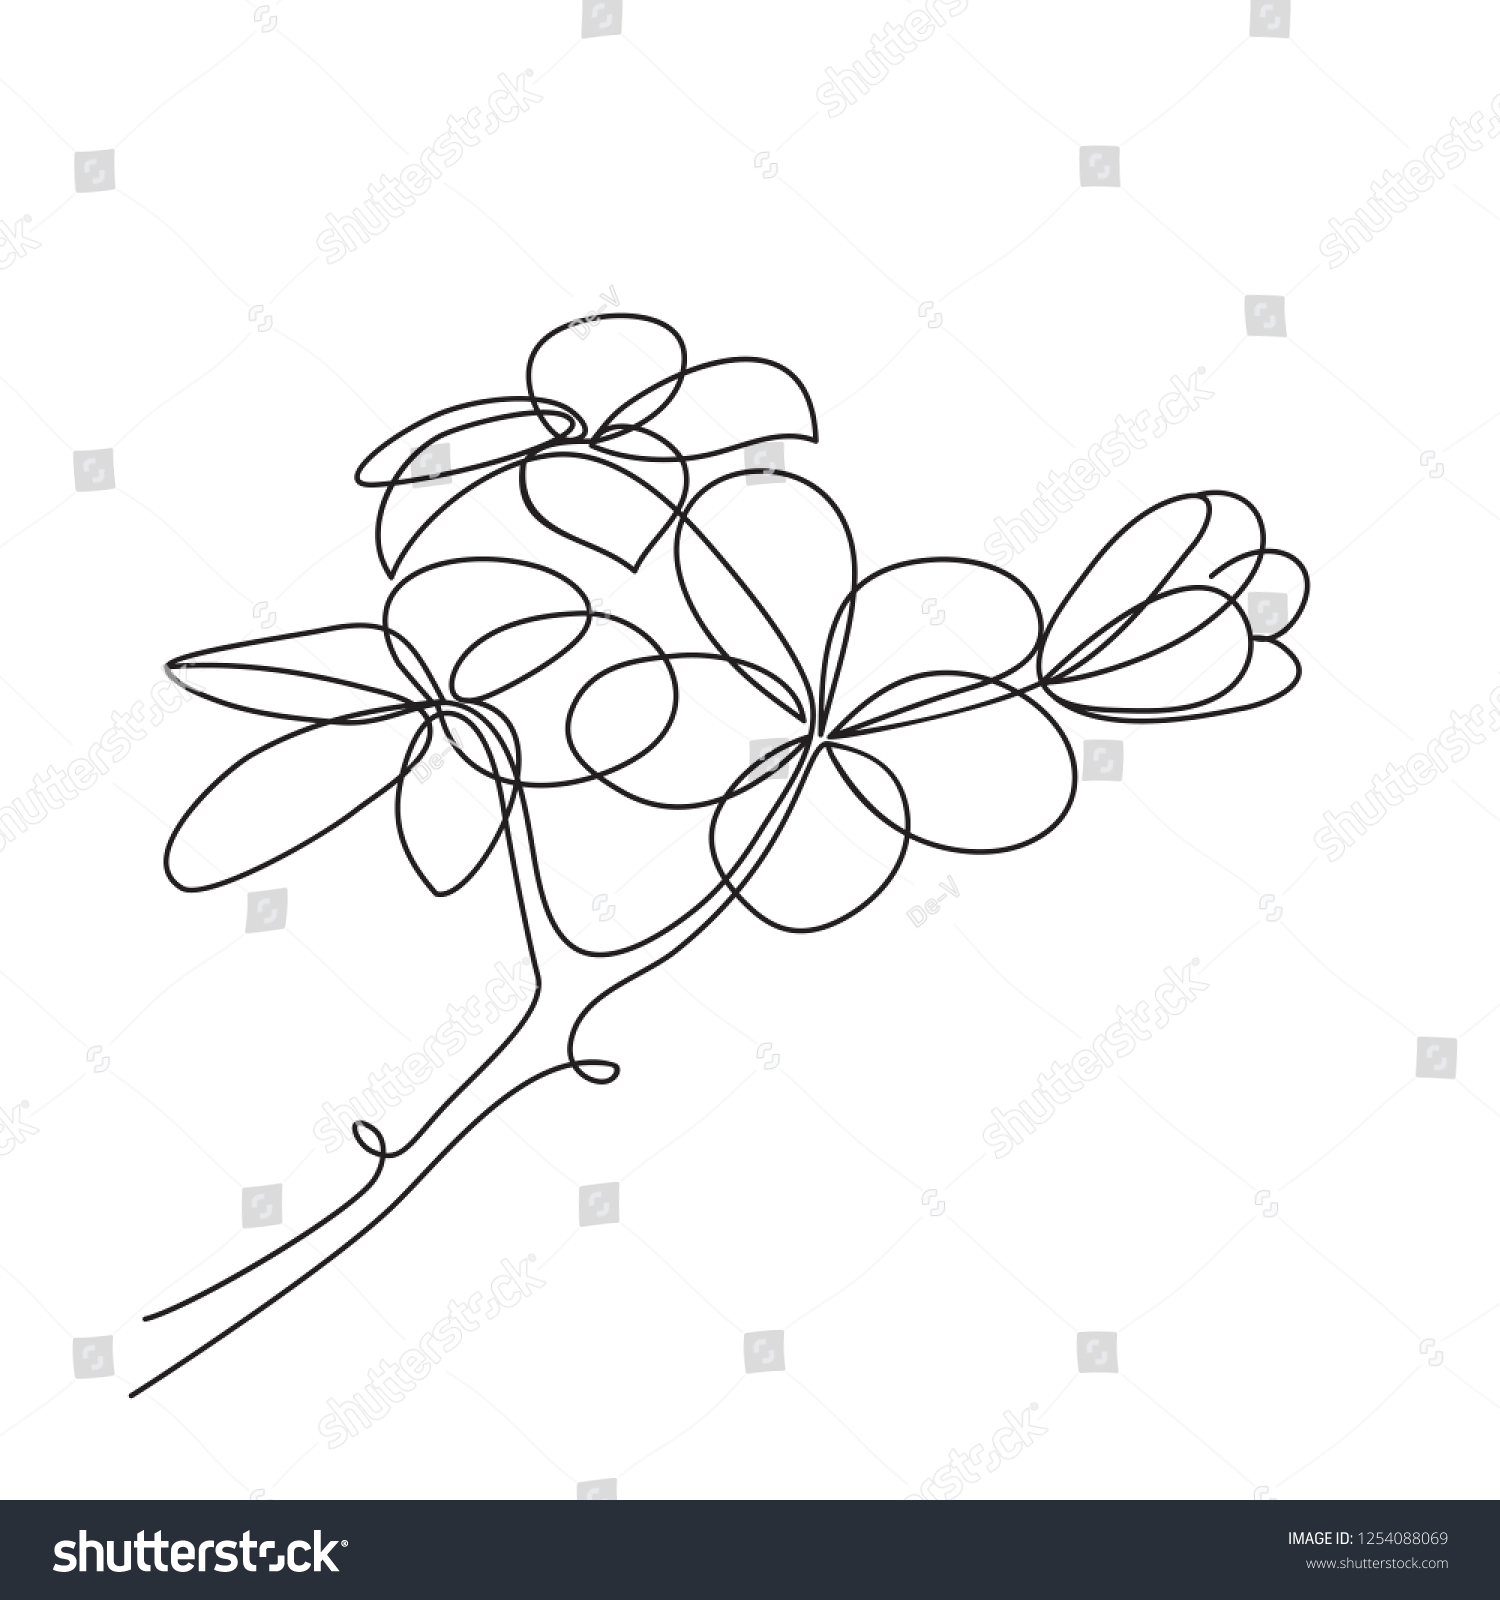 Frangipani Plumeria Flower One Line Drawing Stock Vector Royalty Free 1254088069